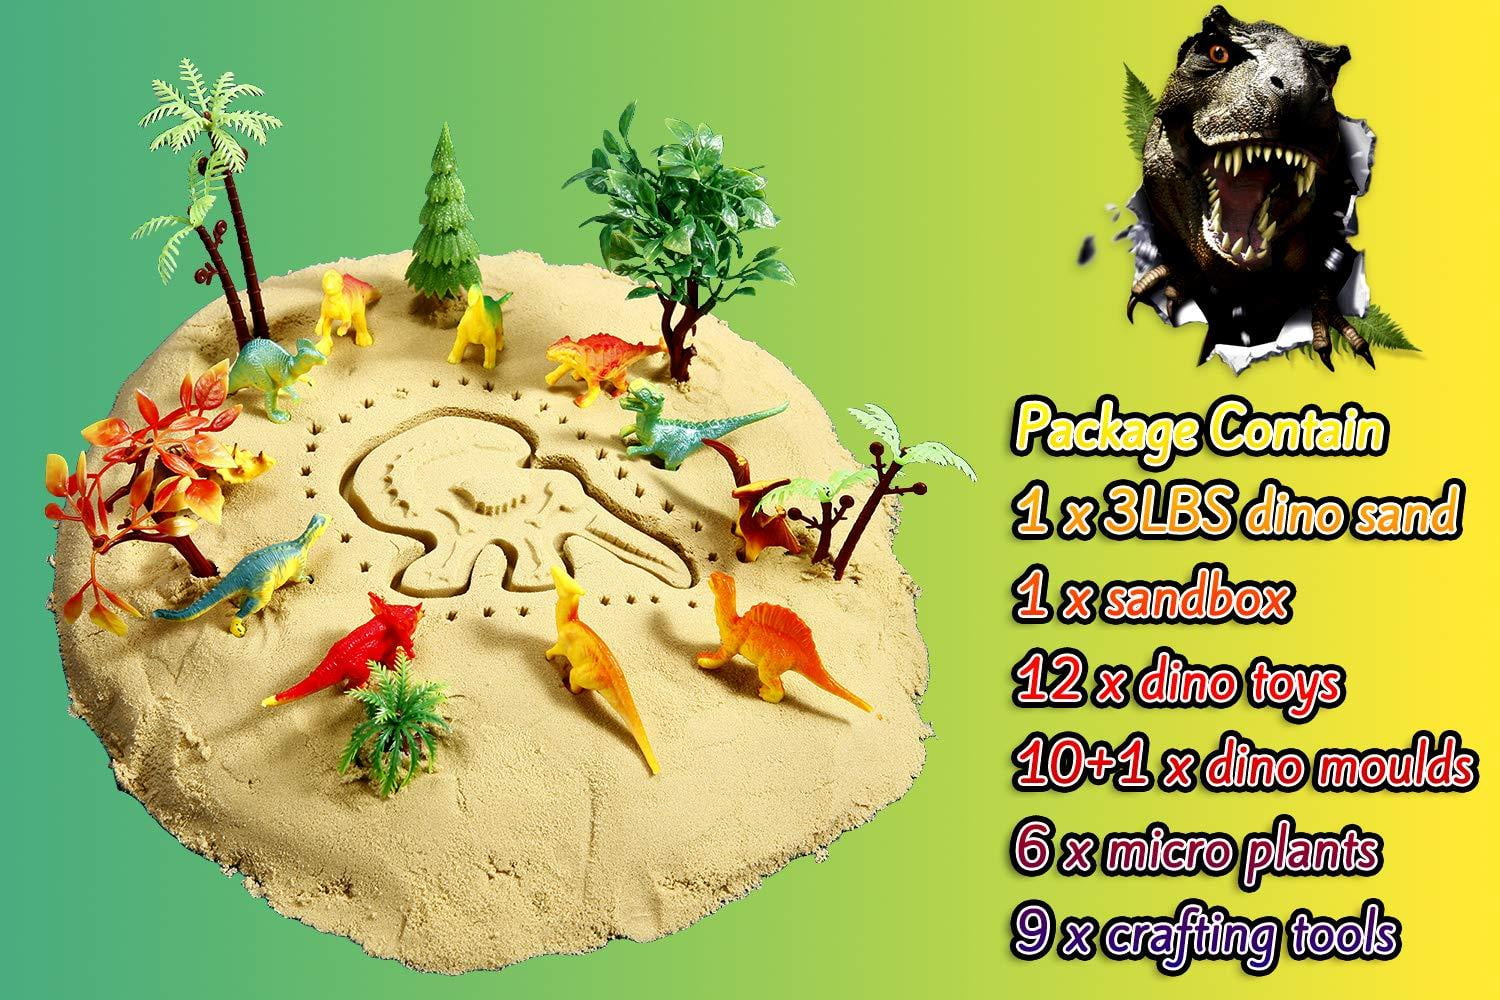 2 lbs Sand and Sand Tray Ccfoud Sand Kit Dinosaur Sandbox Sand Sand Box Kit Includes 20 Shaping Molds,12 Dino Figures 